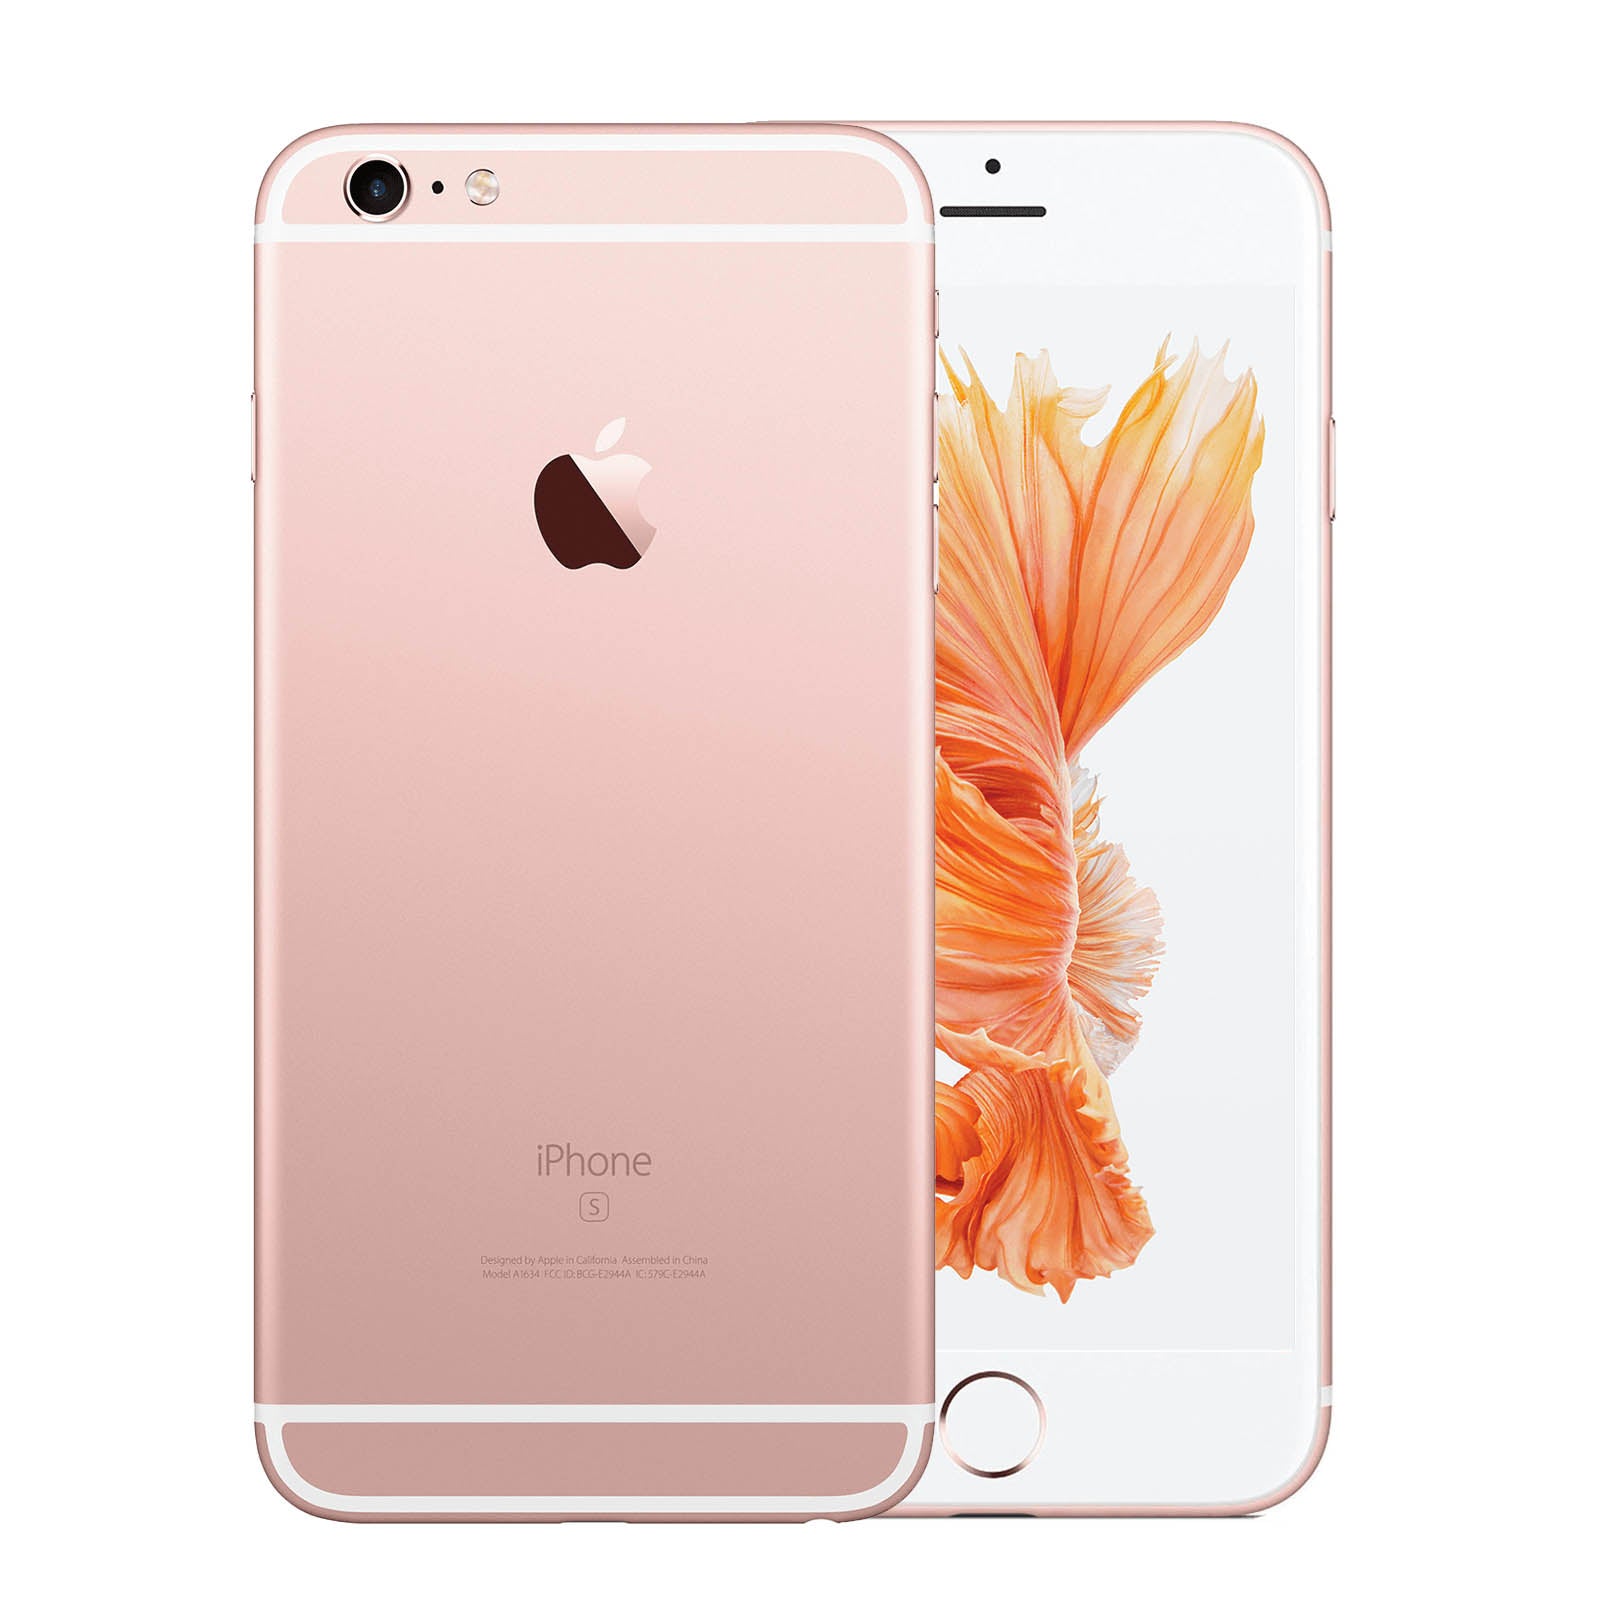 Apple iPhone 6S 32GB Rose Gold Very Good - Unlocked